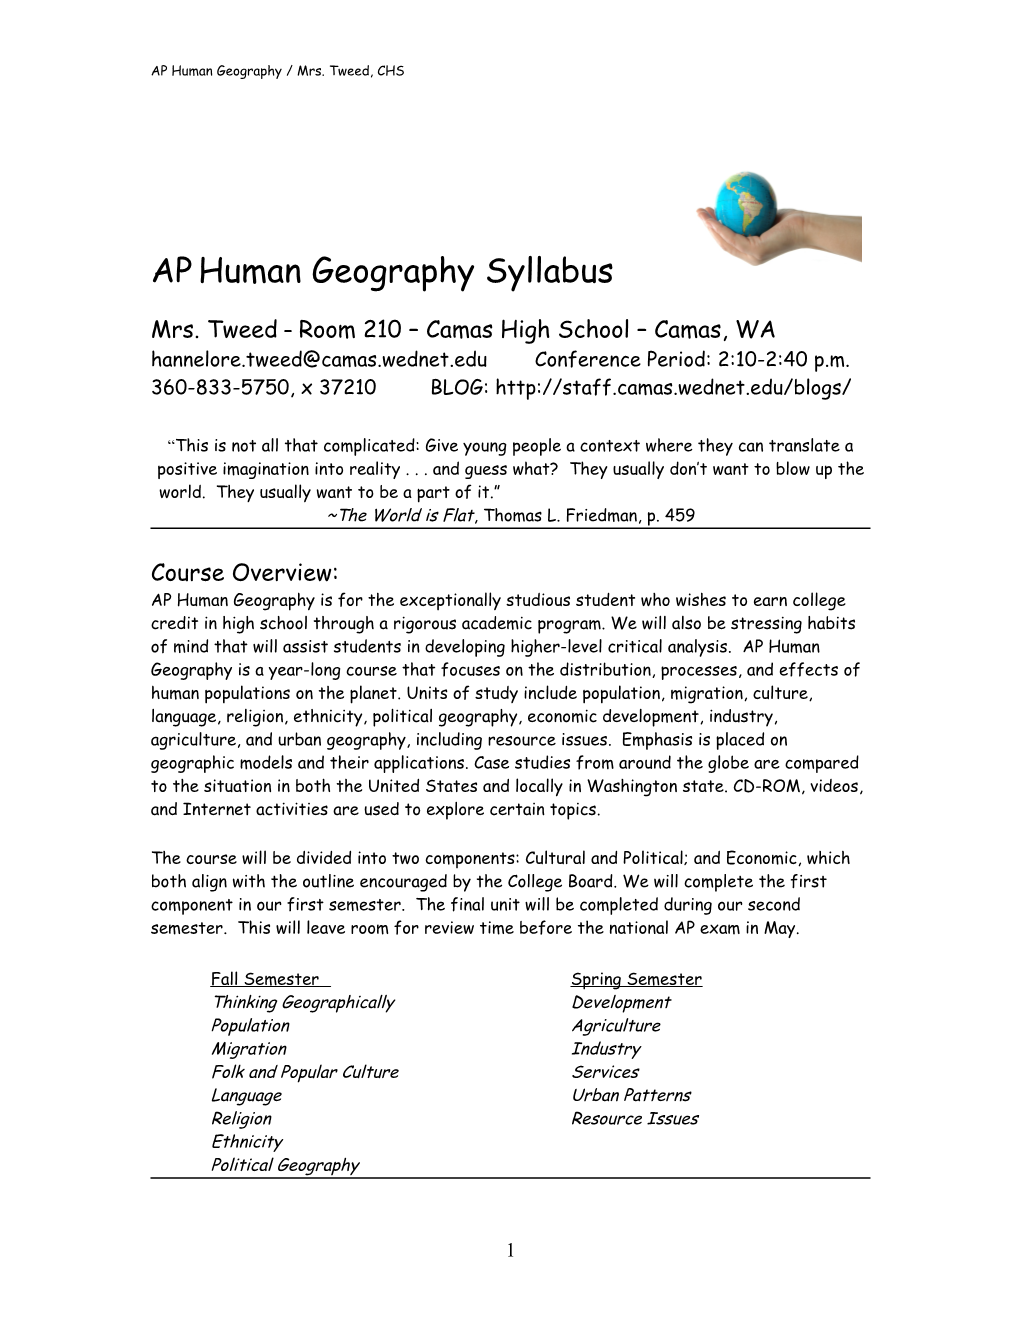 AP Human Geography Syllabus